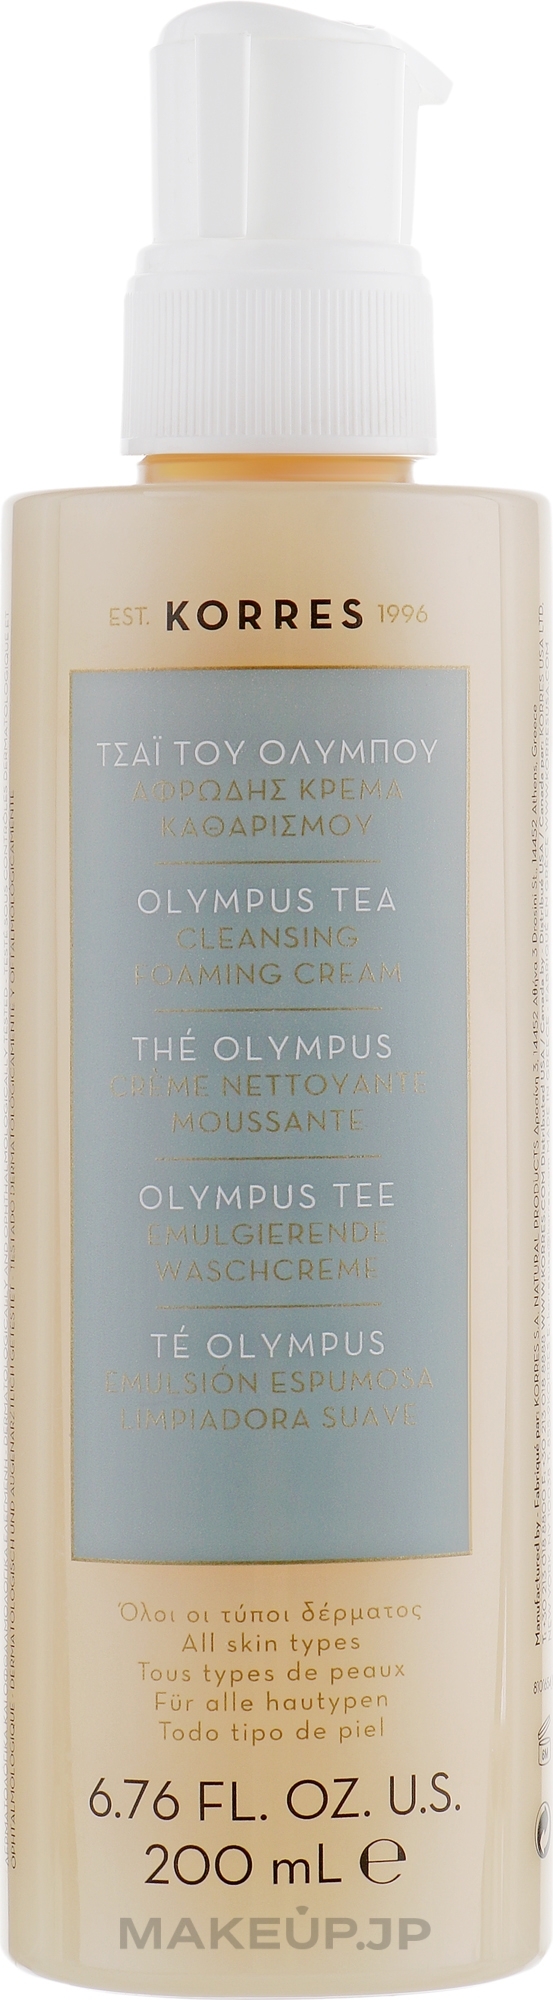 Face Cleansing Foam - Korres Tea Olympus Cleaning Cream 3 in 1 — photo 200 ml